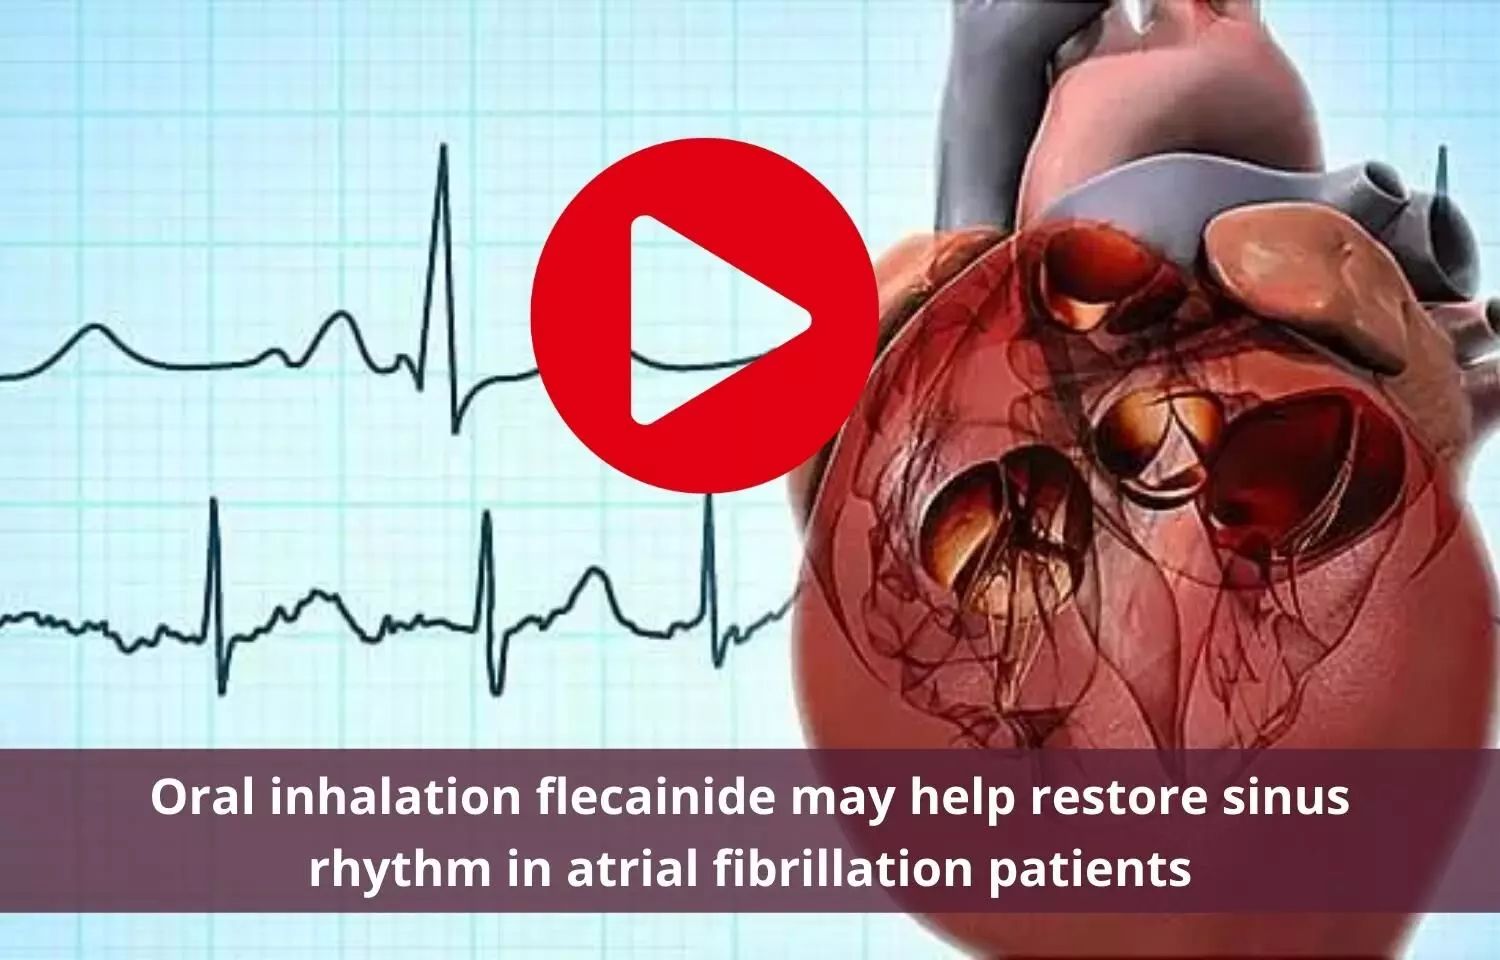 Oral inhalation flecainide may help restore sinus rhythm in atrial fibrillation patients